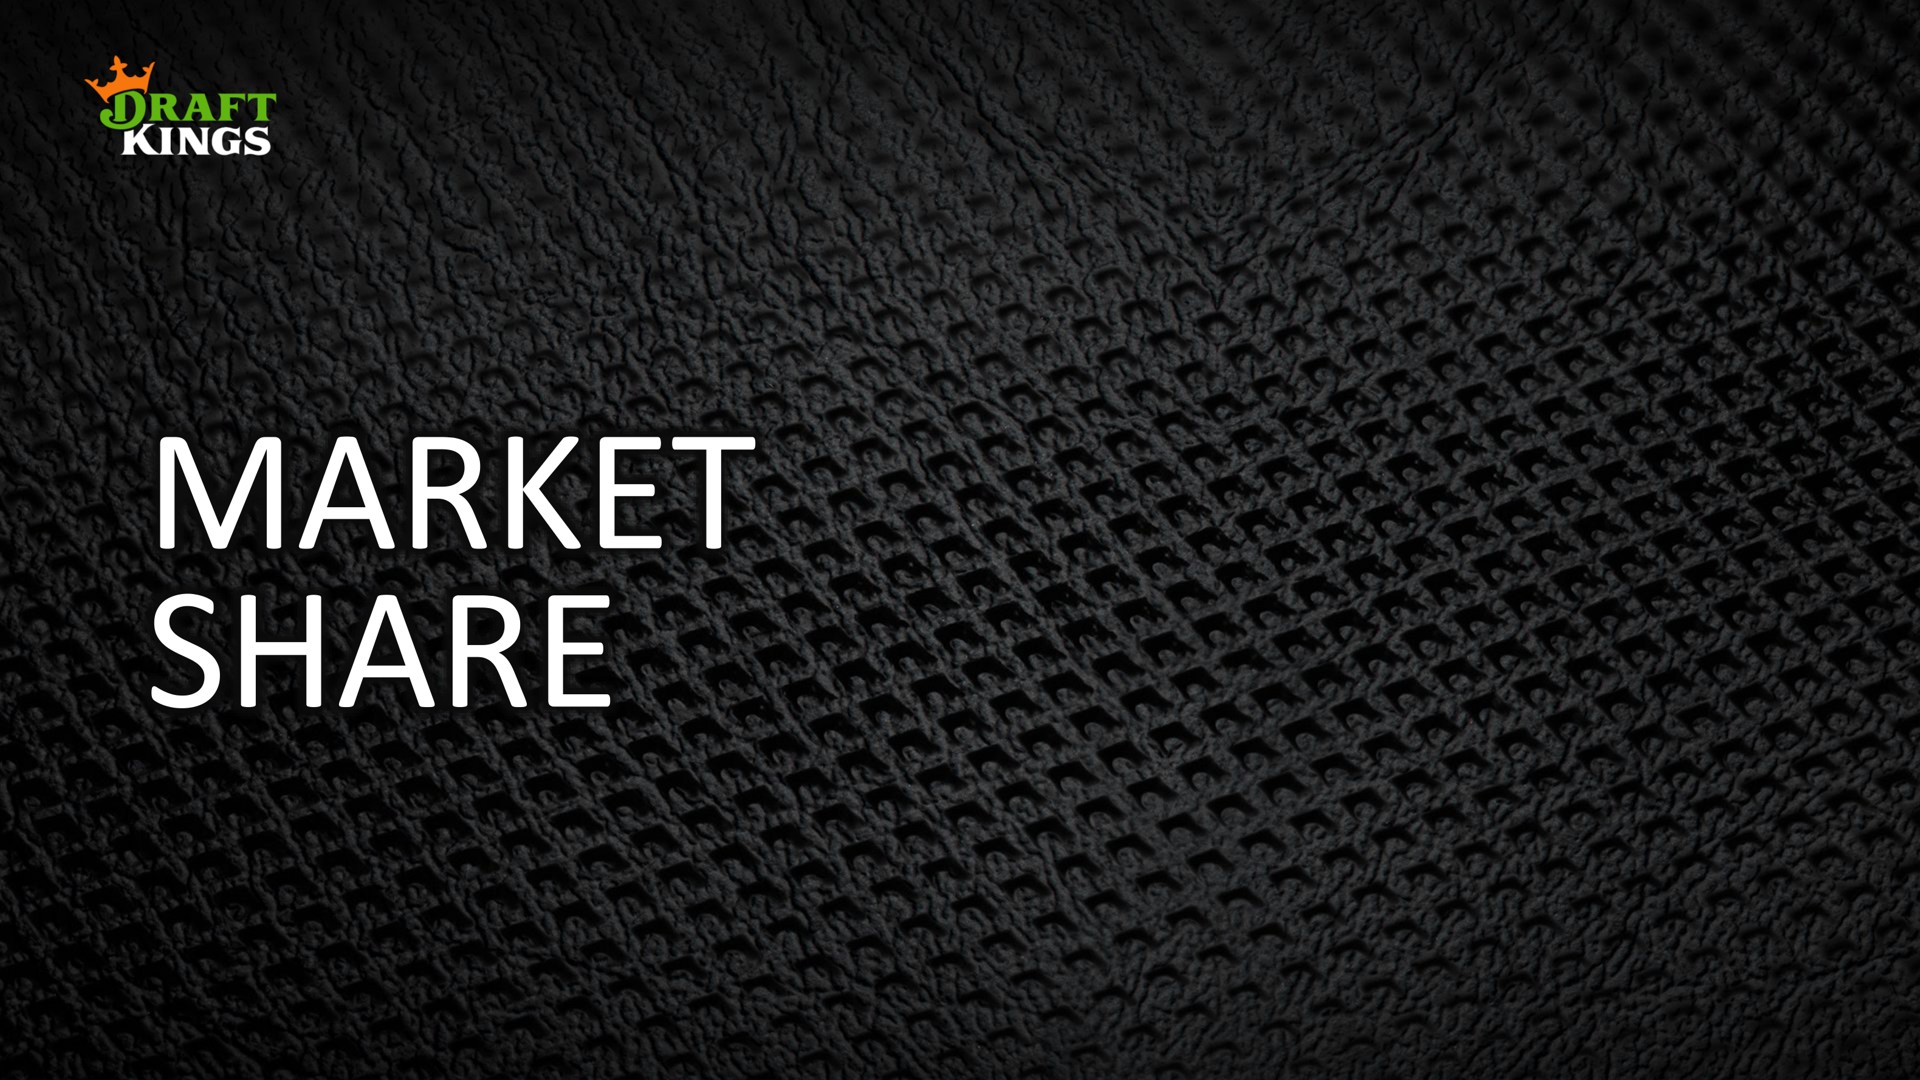 market share kings | DraftKings